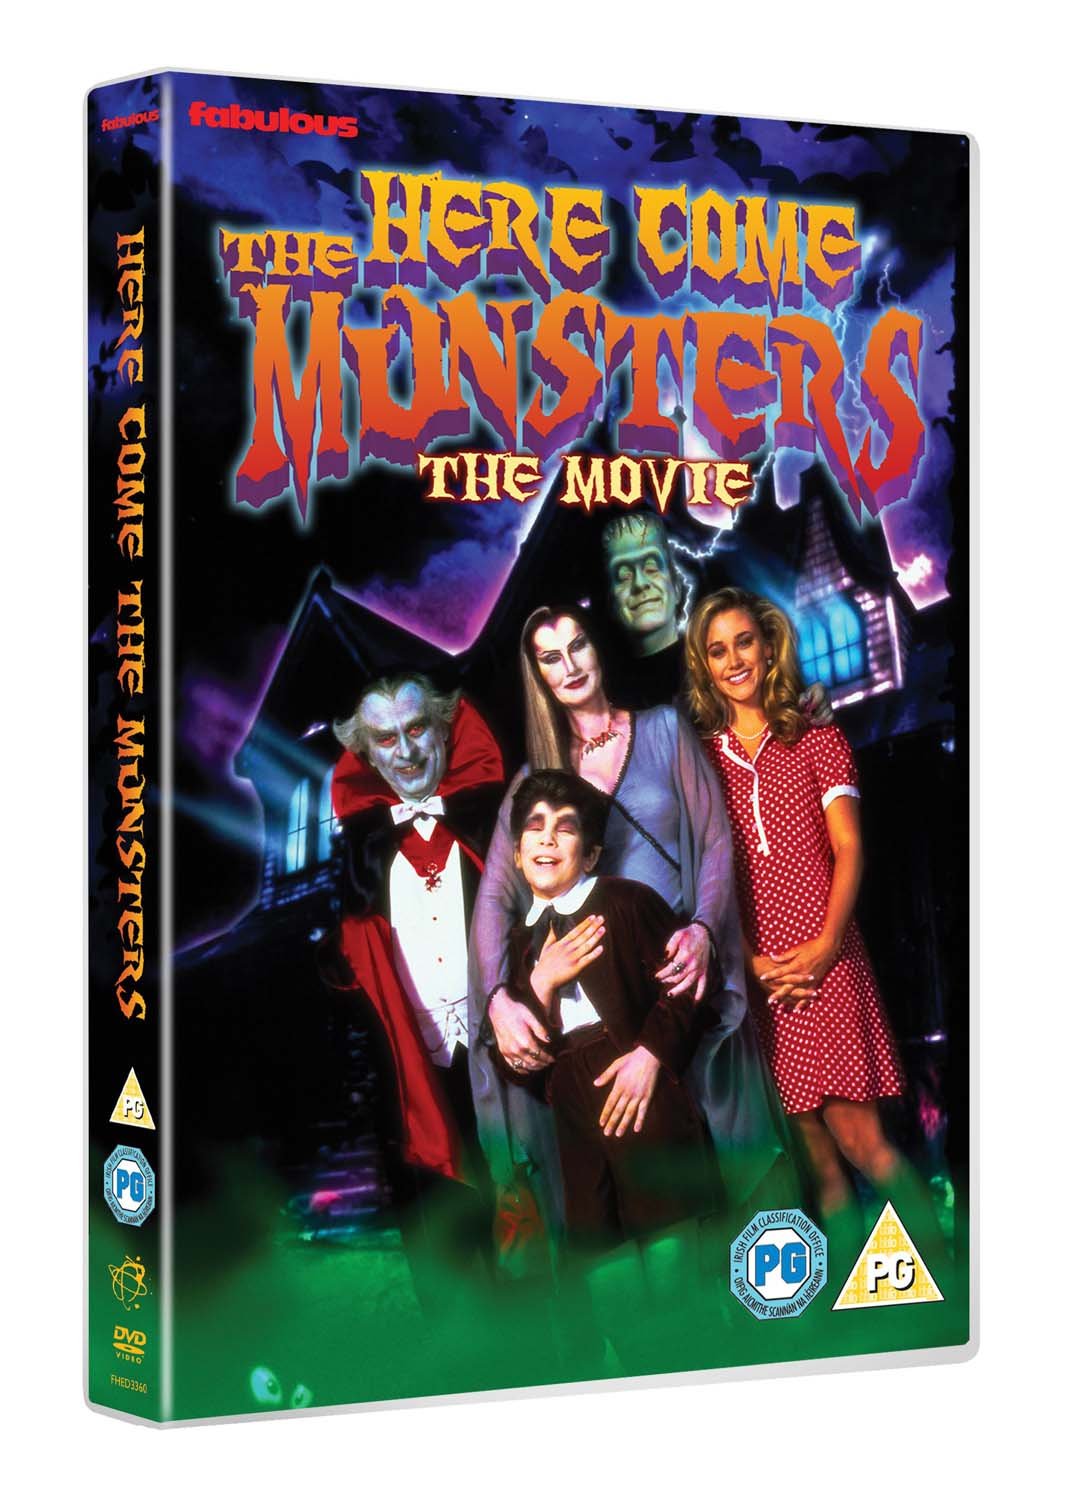 Here Come the Munsters (1995) starring Edward Herrmann, Veronica Hamel, Robert Morse